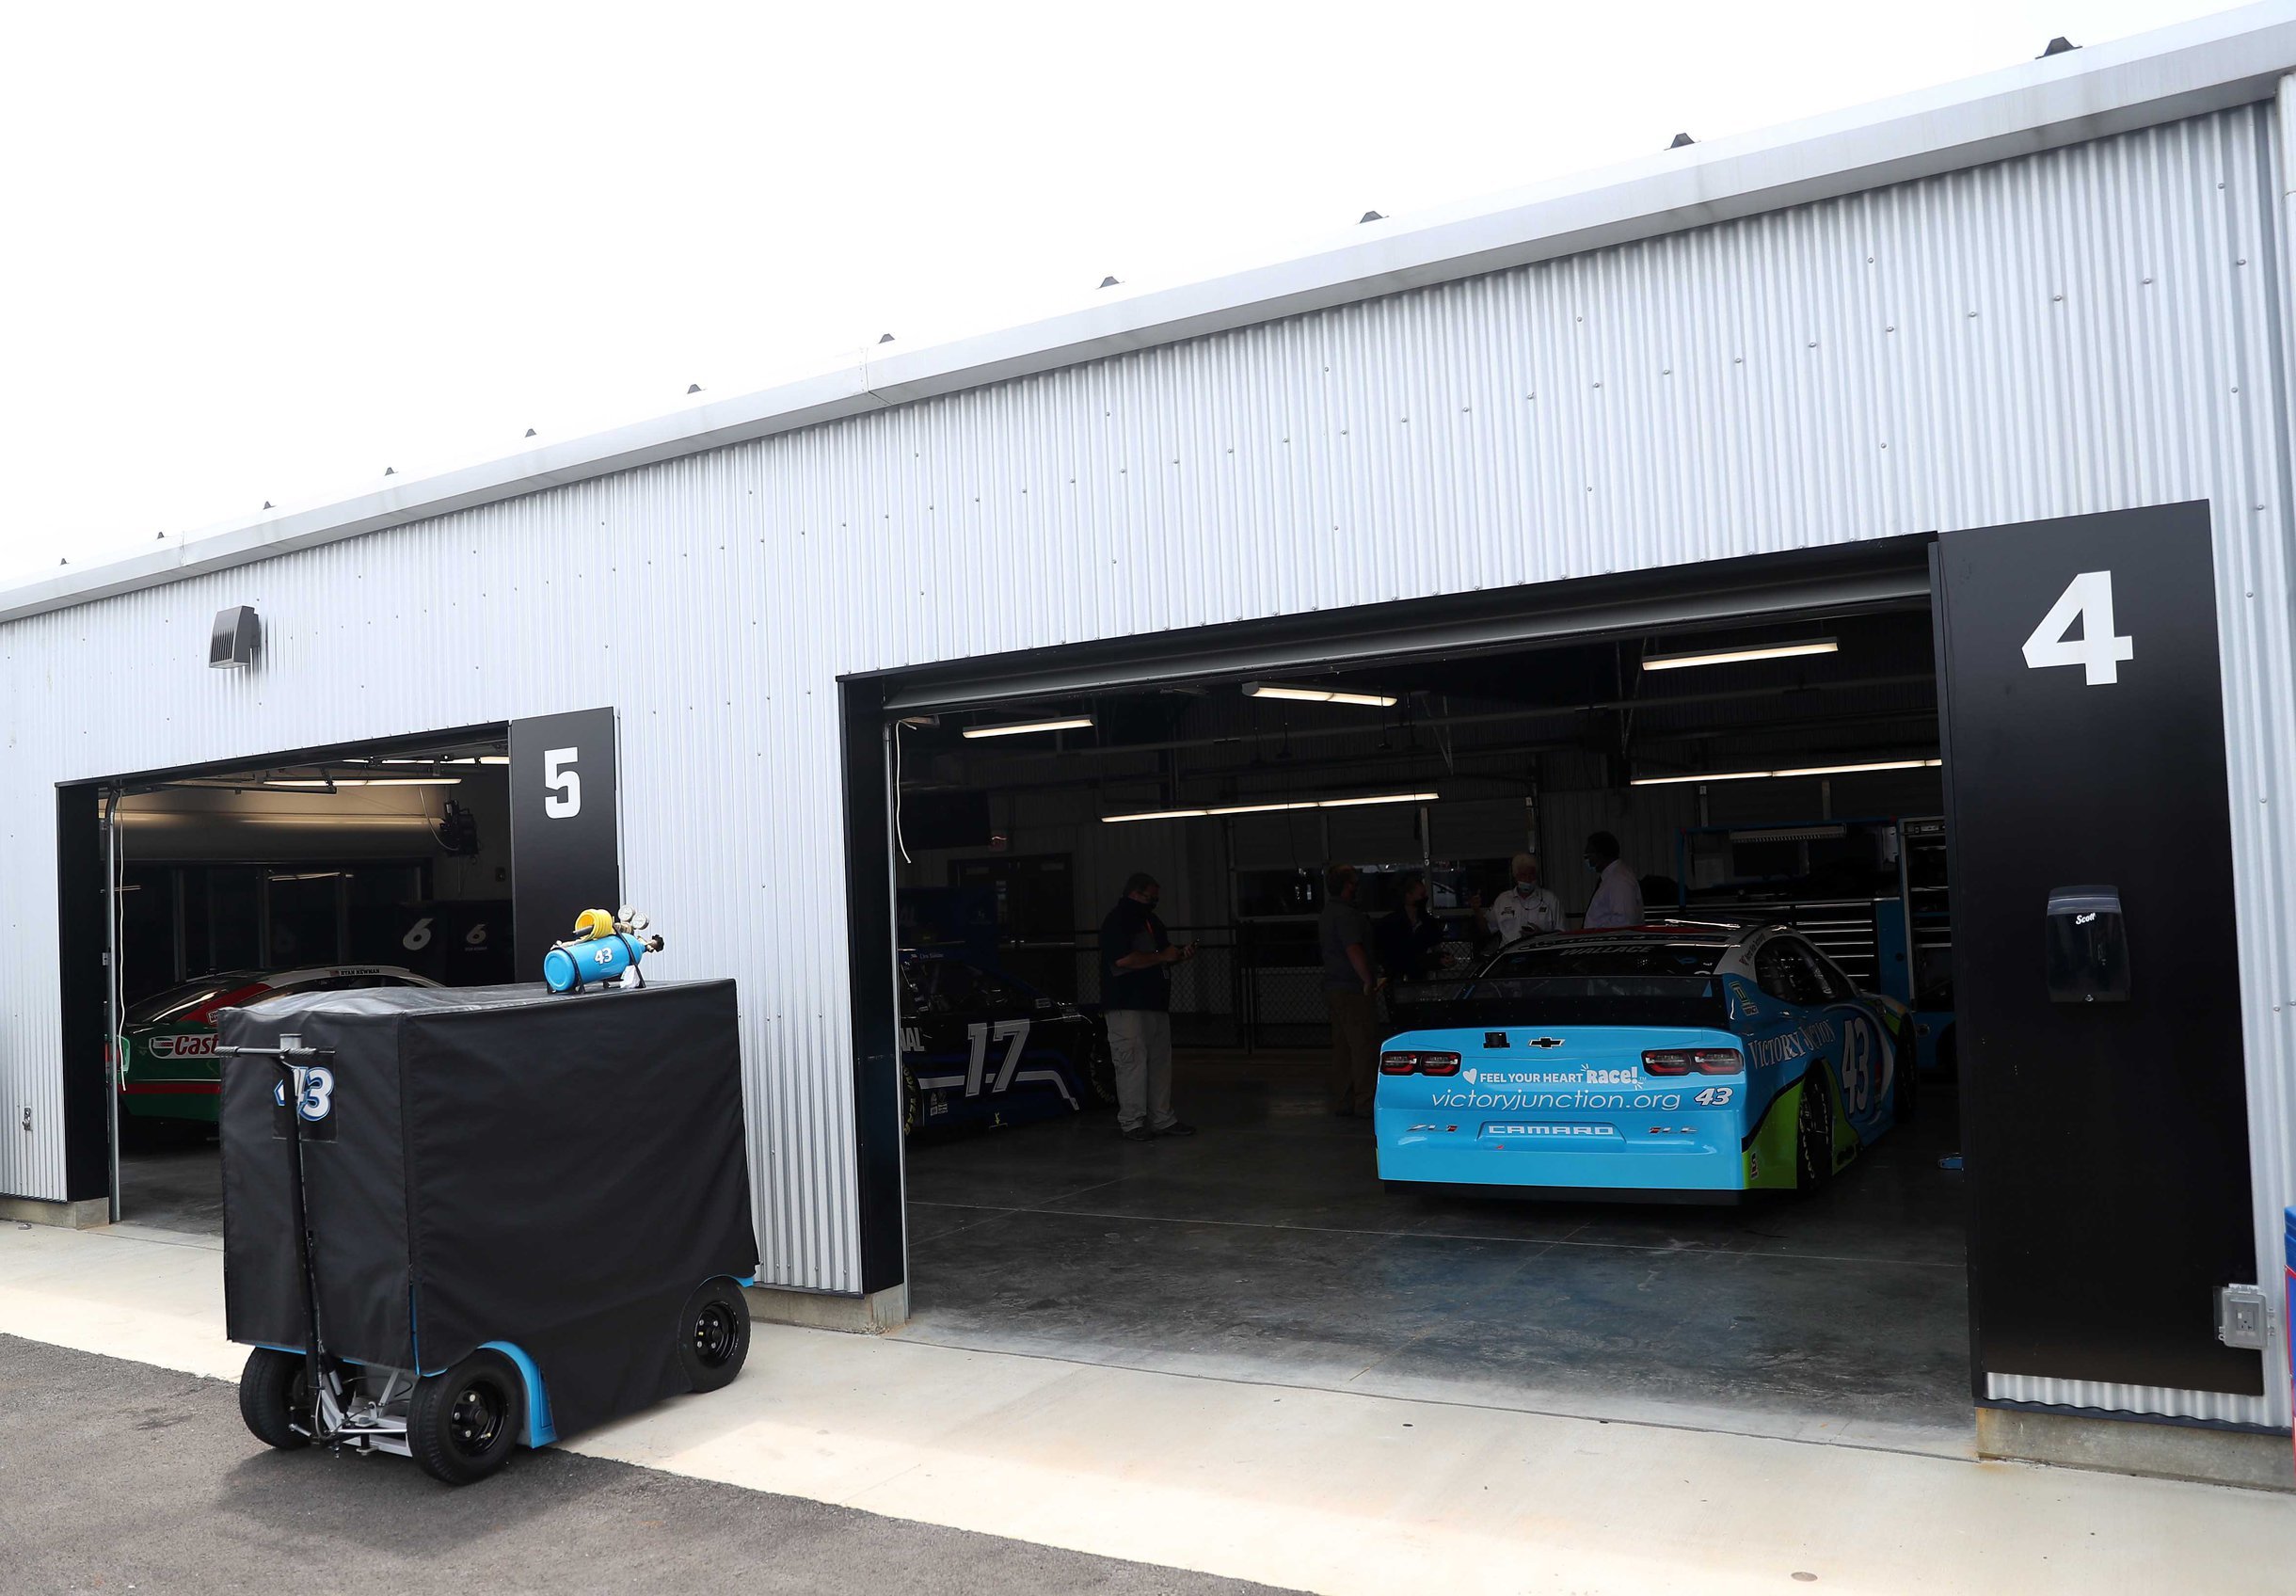 Bubba Wallace - NASCAR garage area at Talladega Superspeedway - NASCAR Cup Series